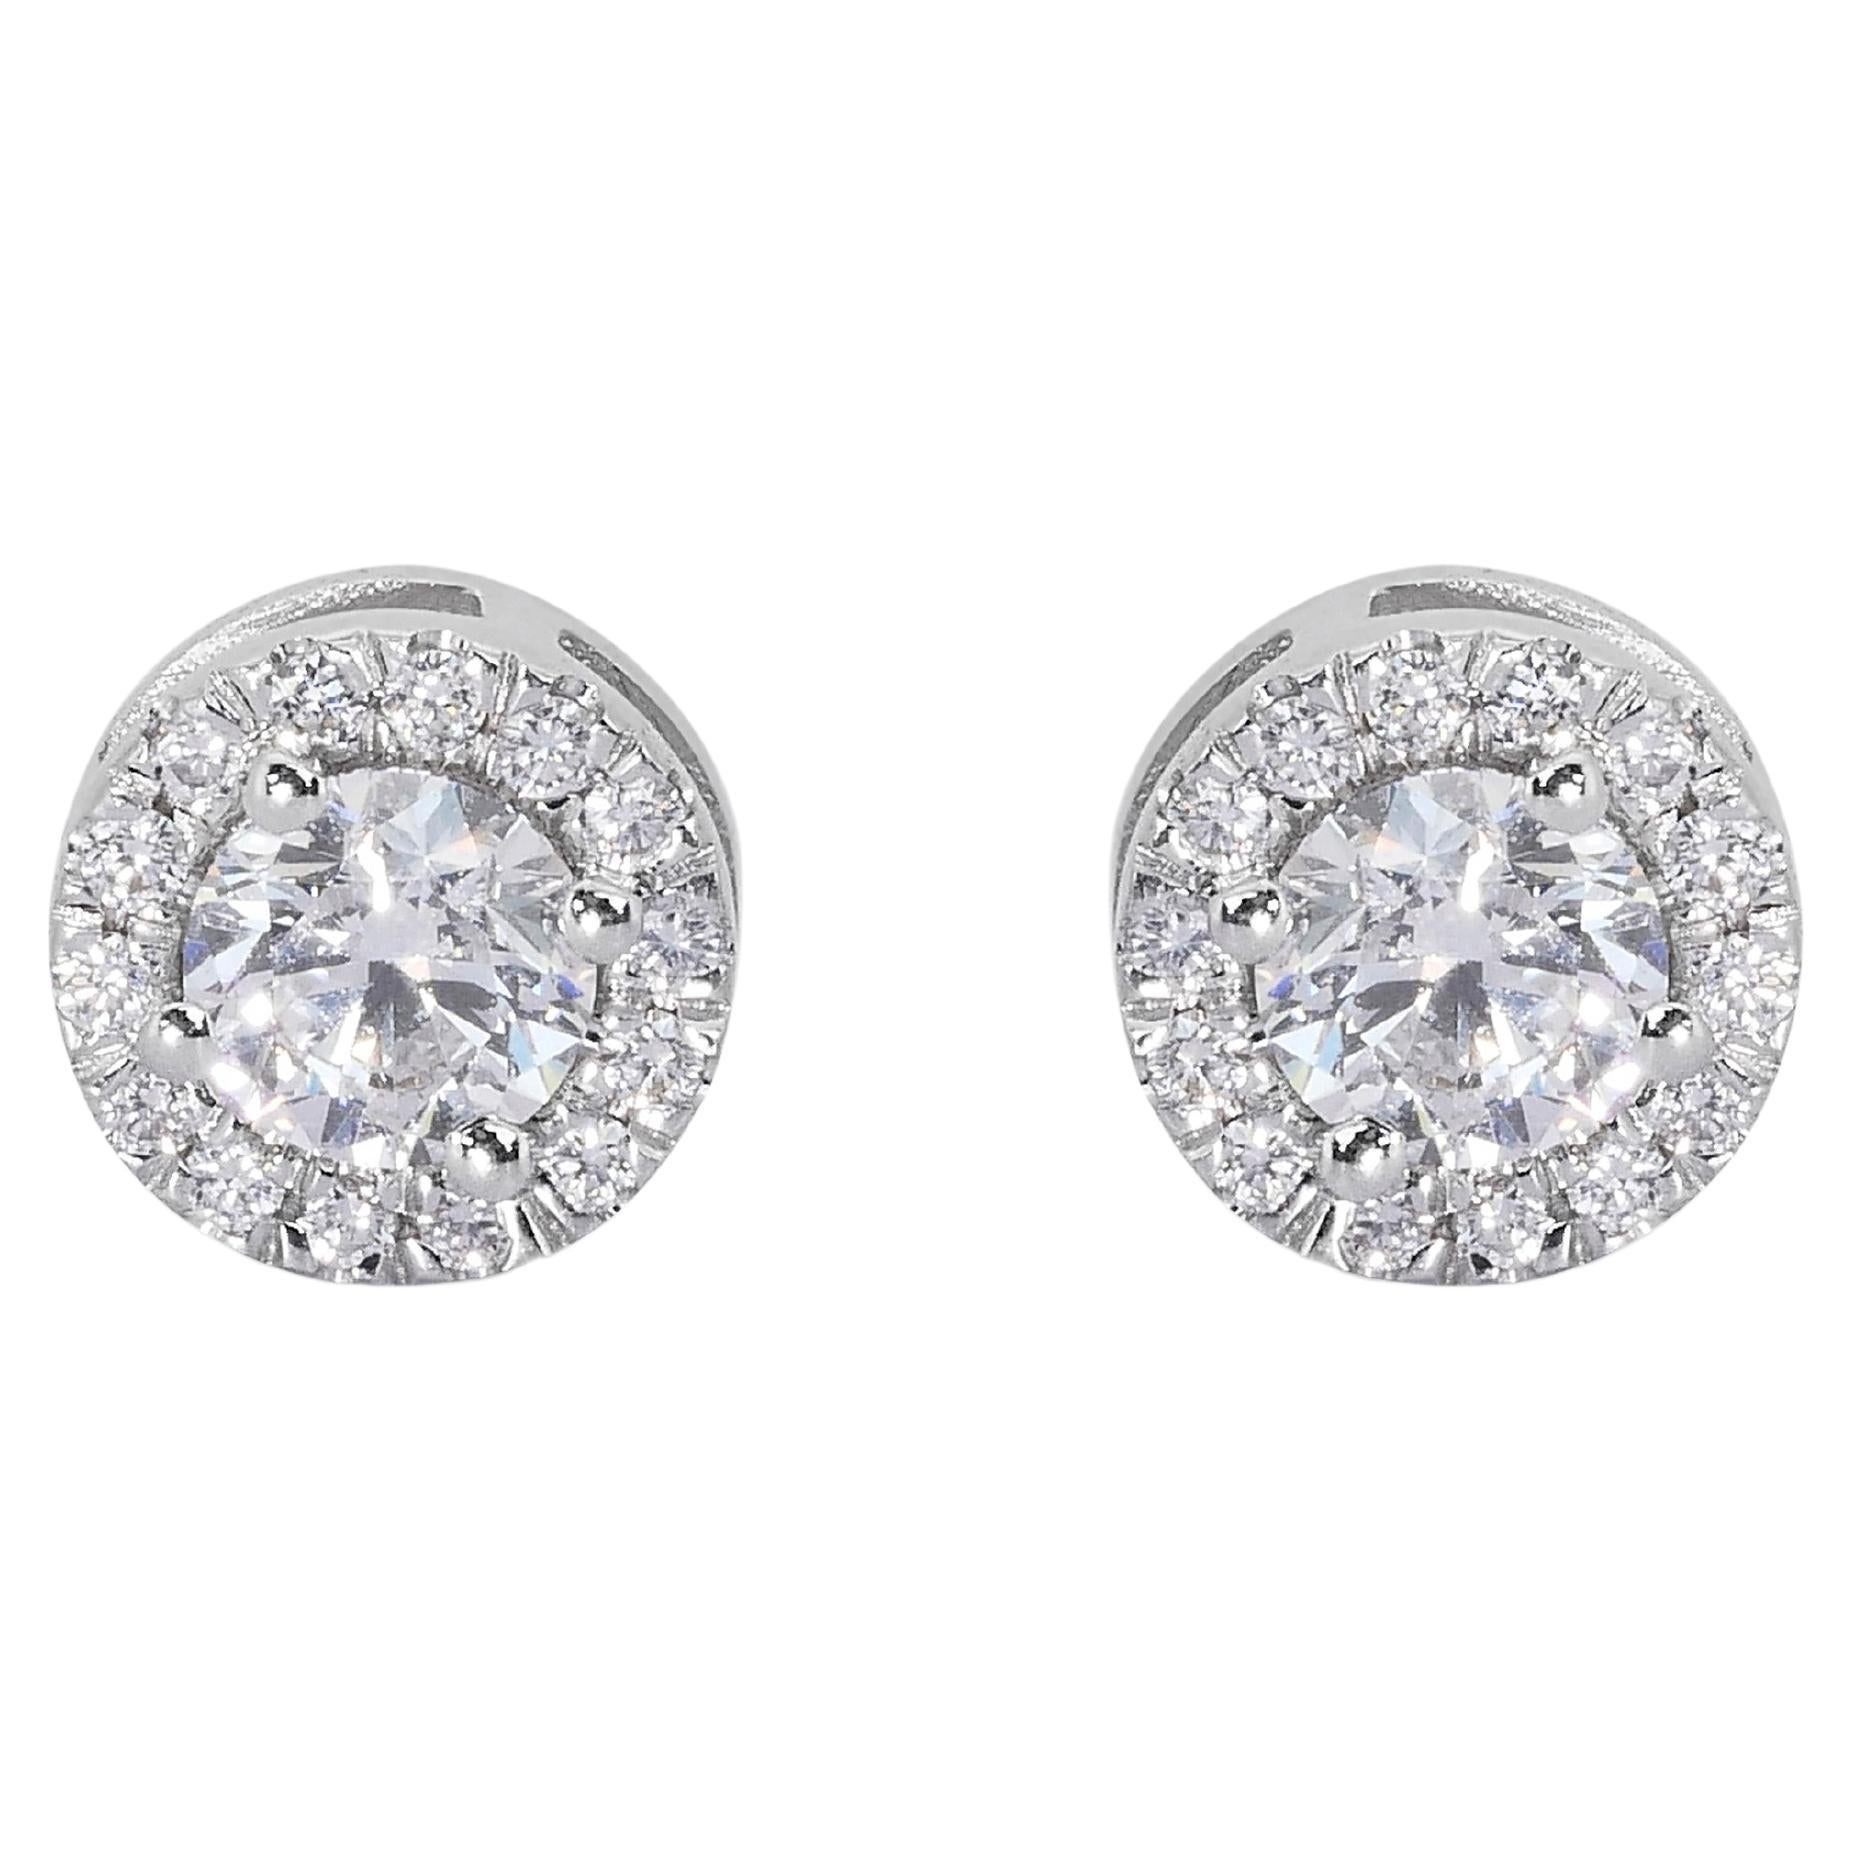 Glamorous 18k White Gold Halo Earrings w/ 1.05 Carat Natural Diamonds GIA Cert